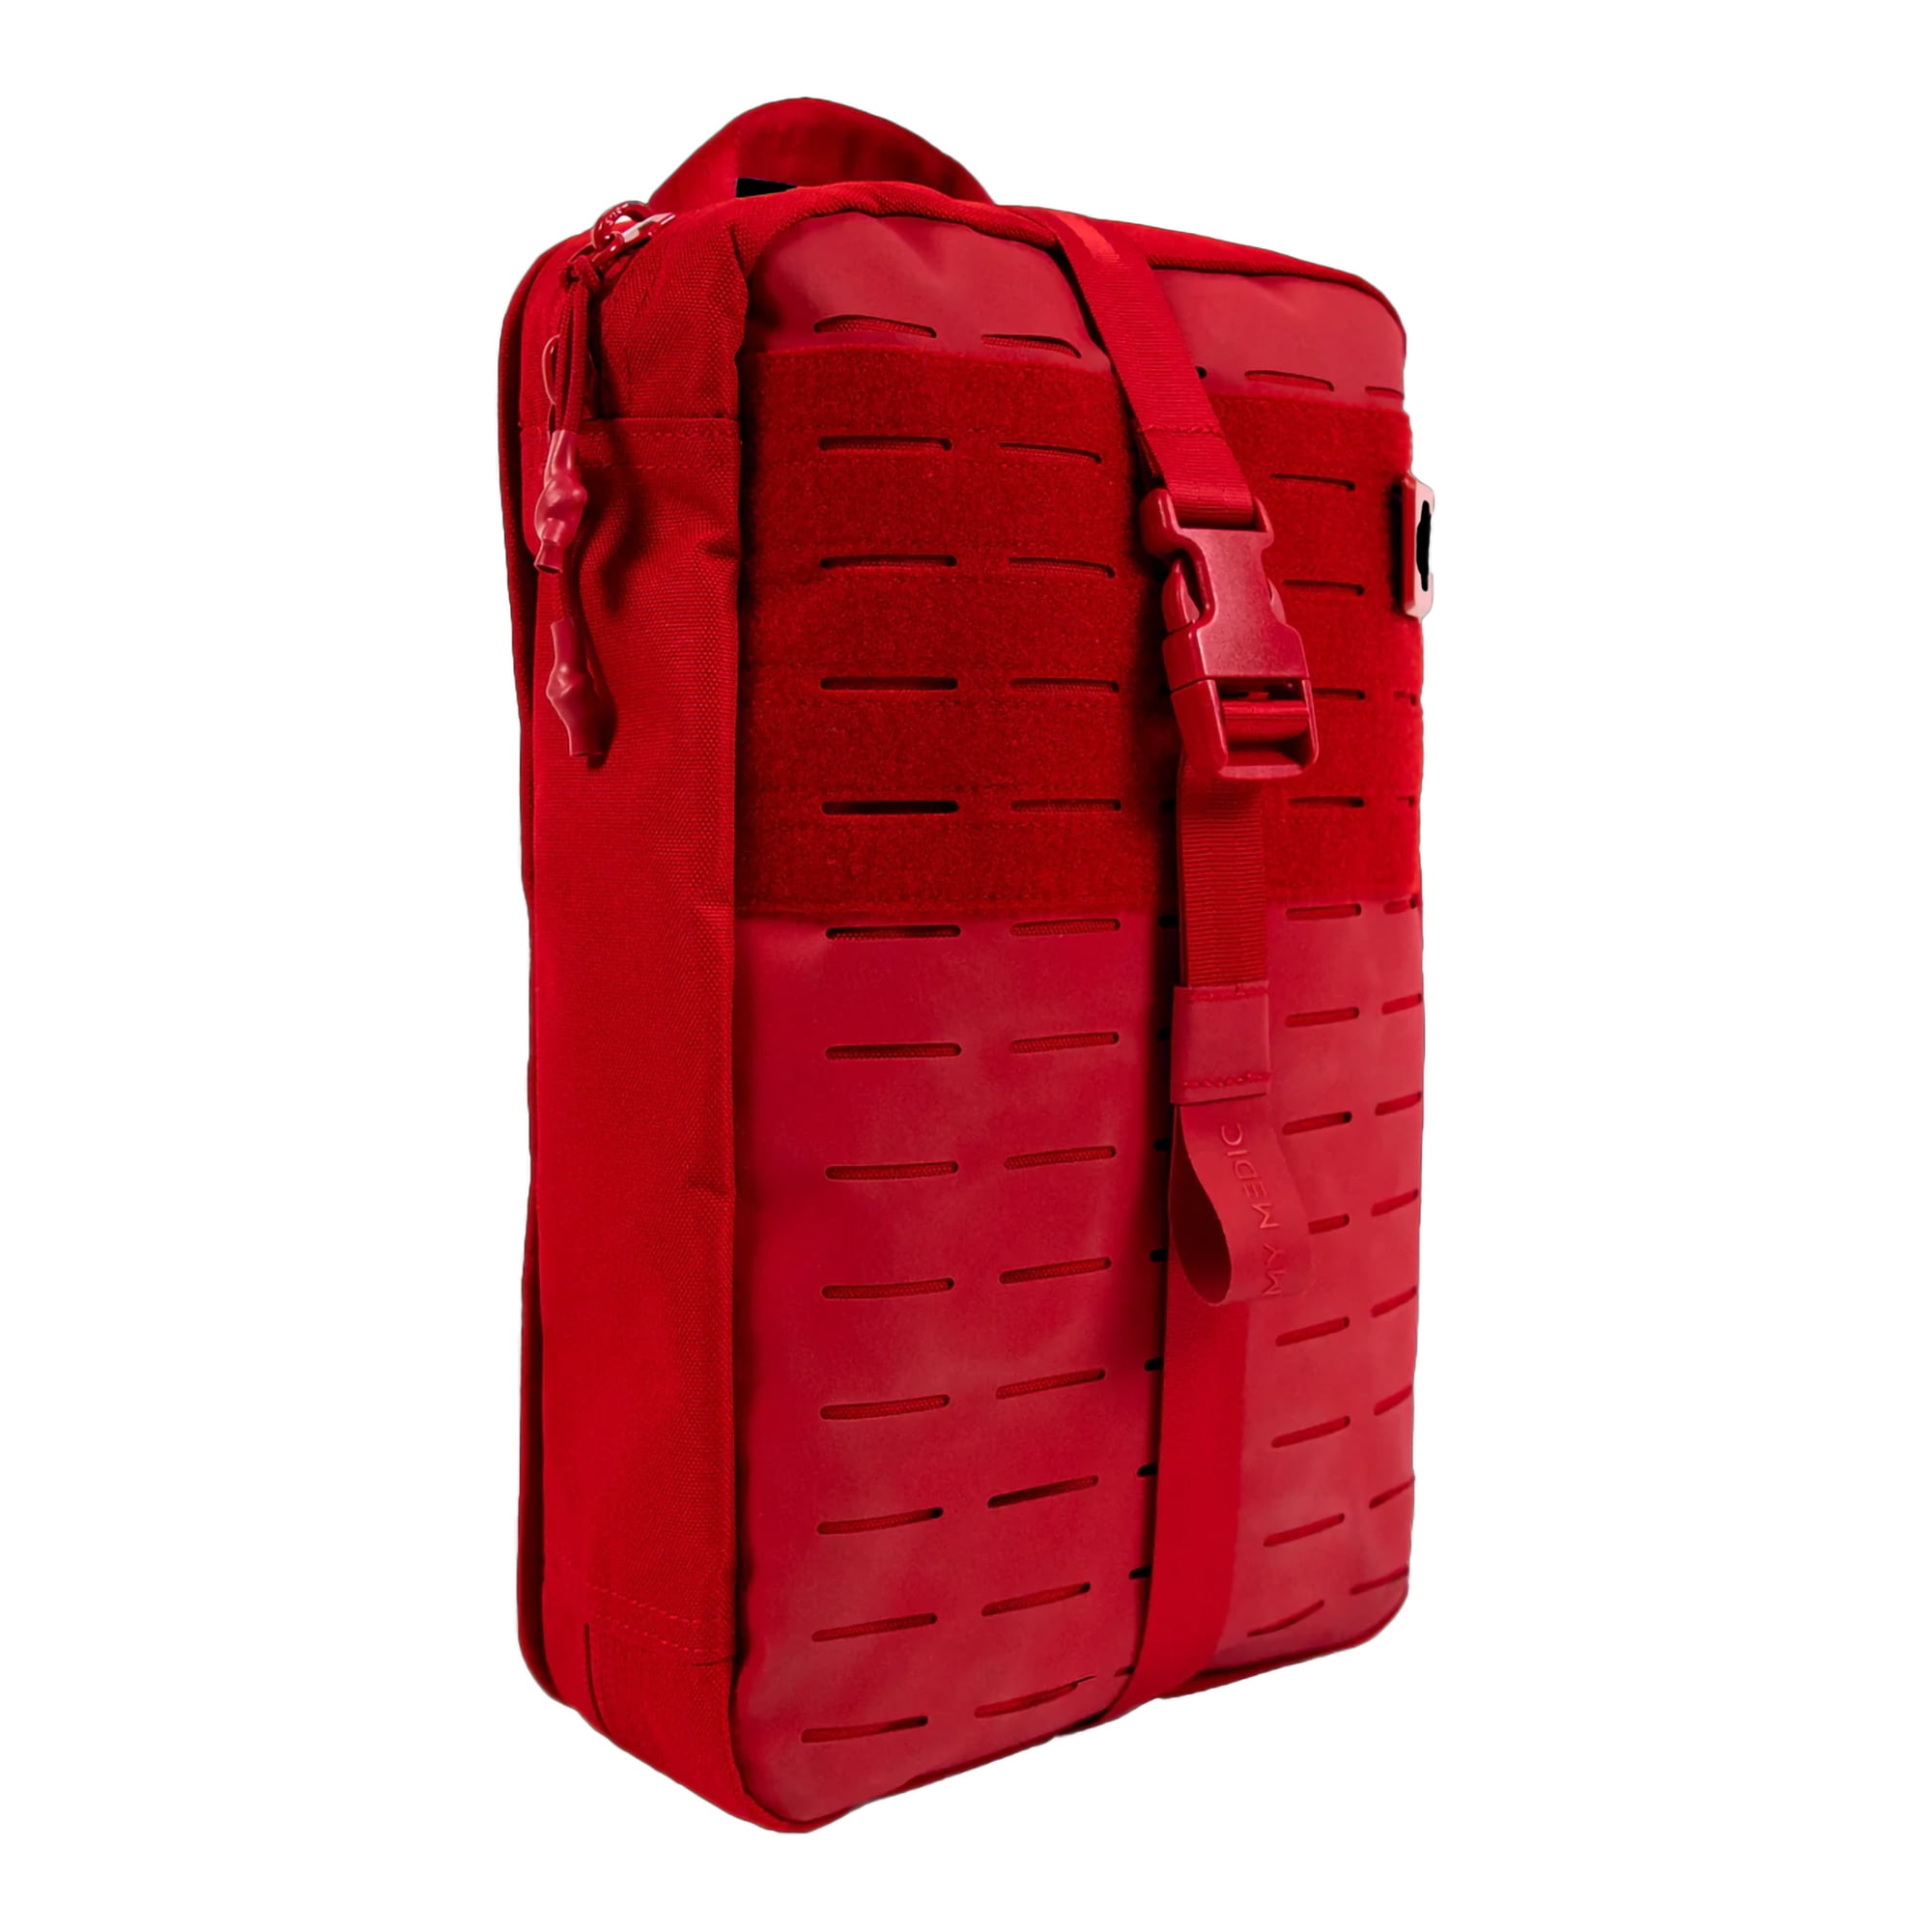 237PCS Military First Aid Kit All Purpose Premium Medical Supplies